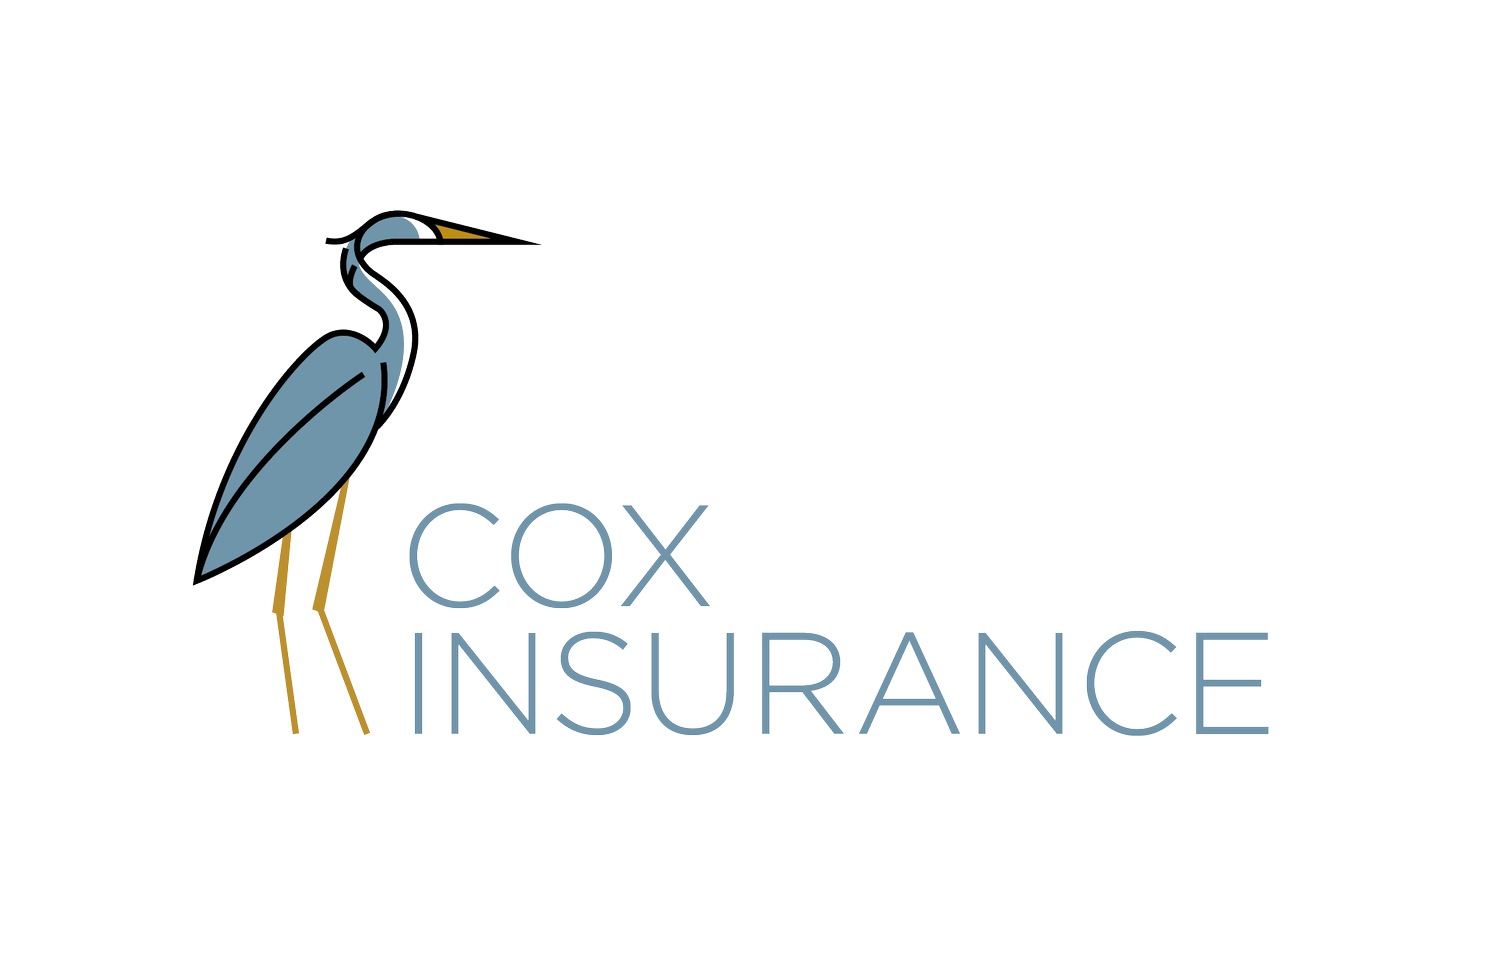 Cox Insurance